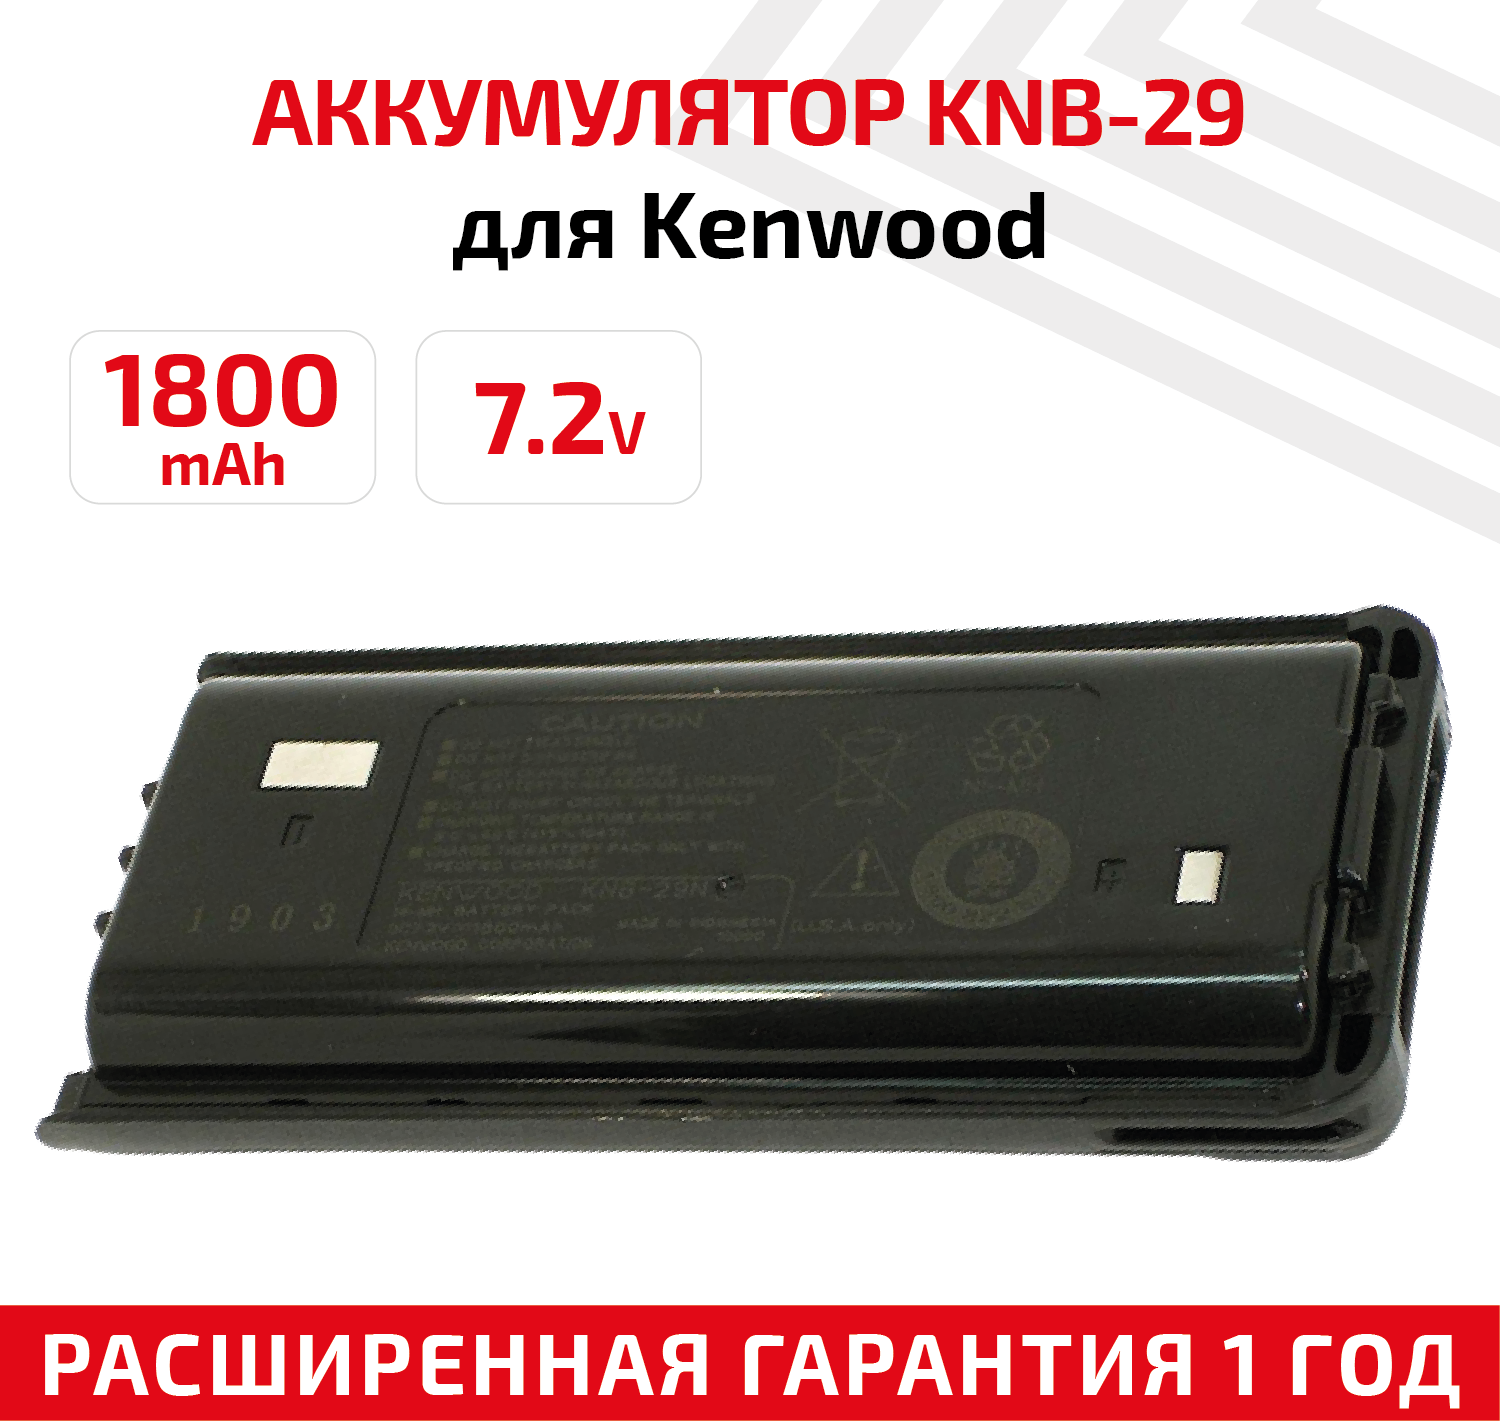 Аккумуляторная батарея (АКБ) KNB-29 для рации (радиостанции) Kenwood NX-240, NX-340, TK-2200, 1800мАч, 7.2В, Ni-Mh